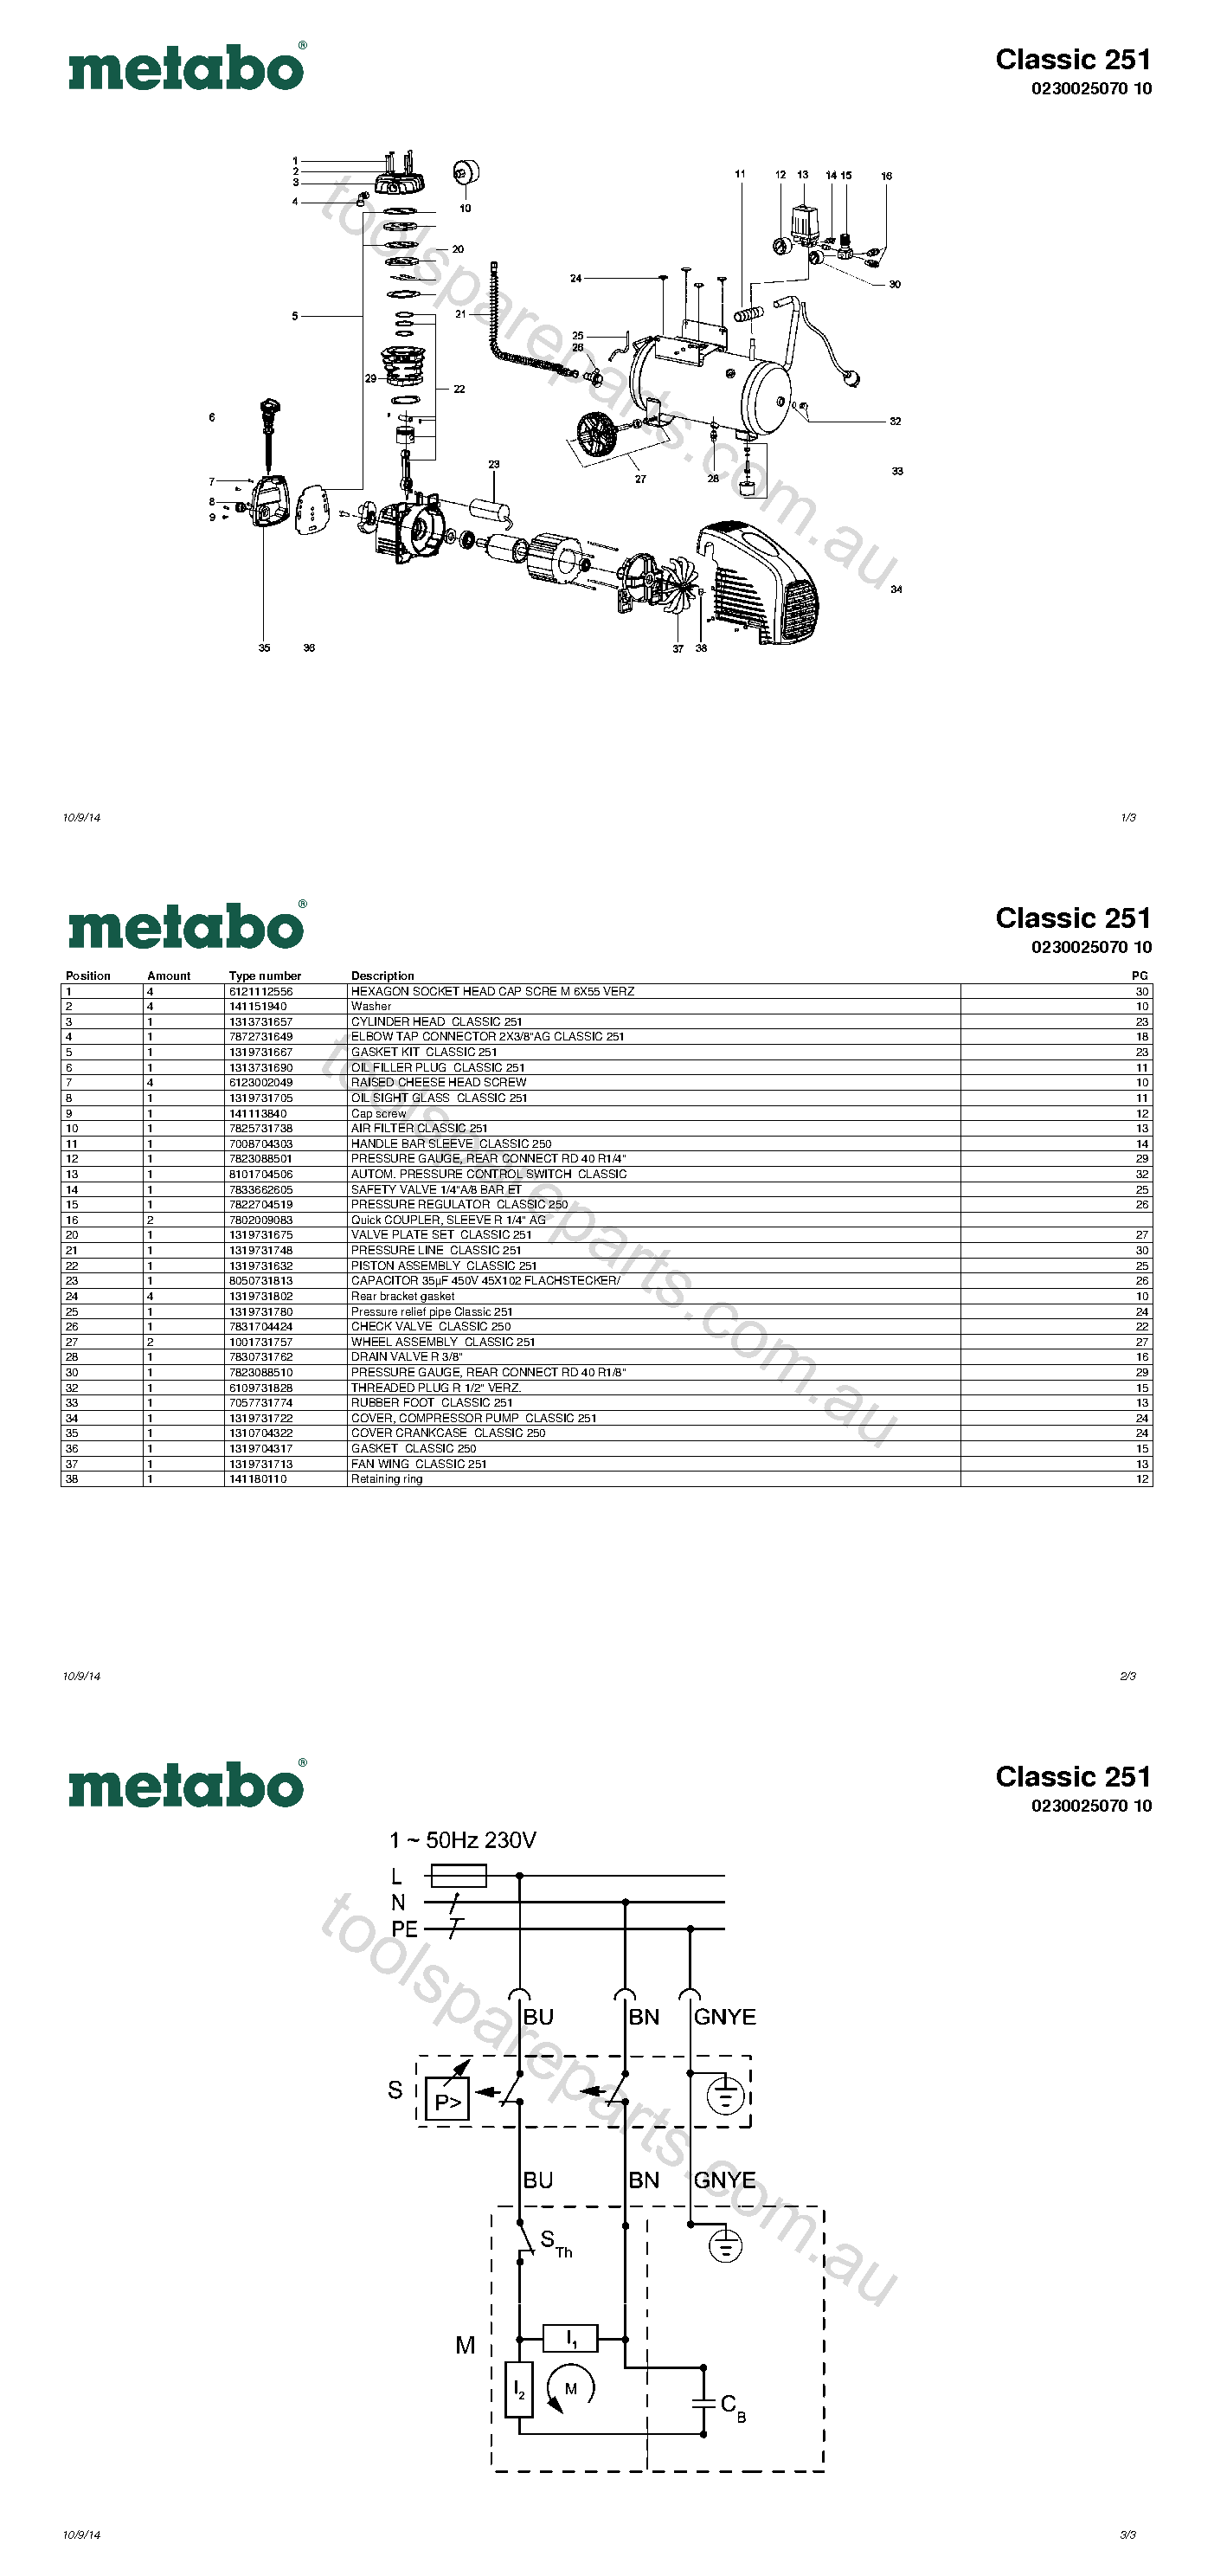 Metabo Classic 251 0230025070 10  Diagram 1